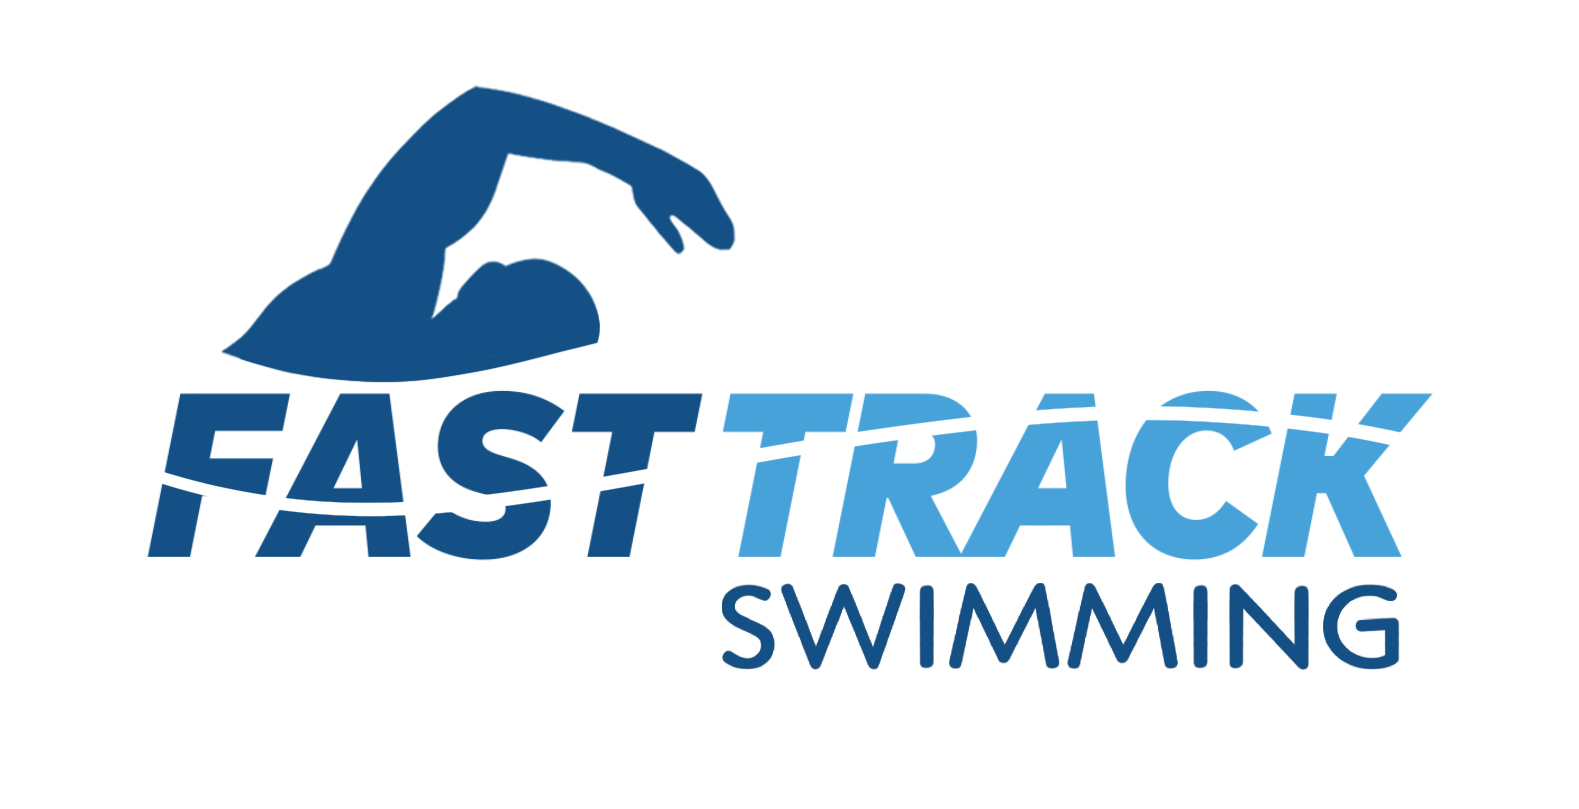 Fast Track Swimming